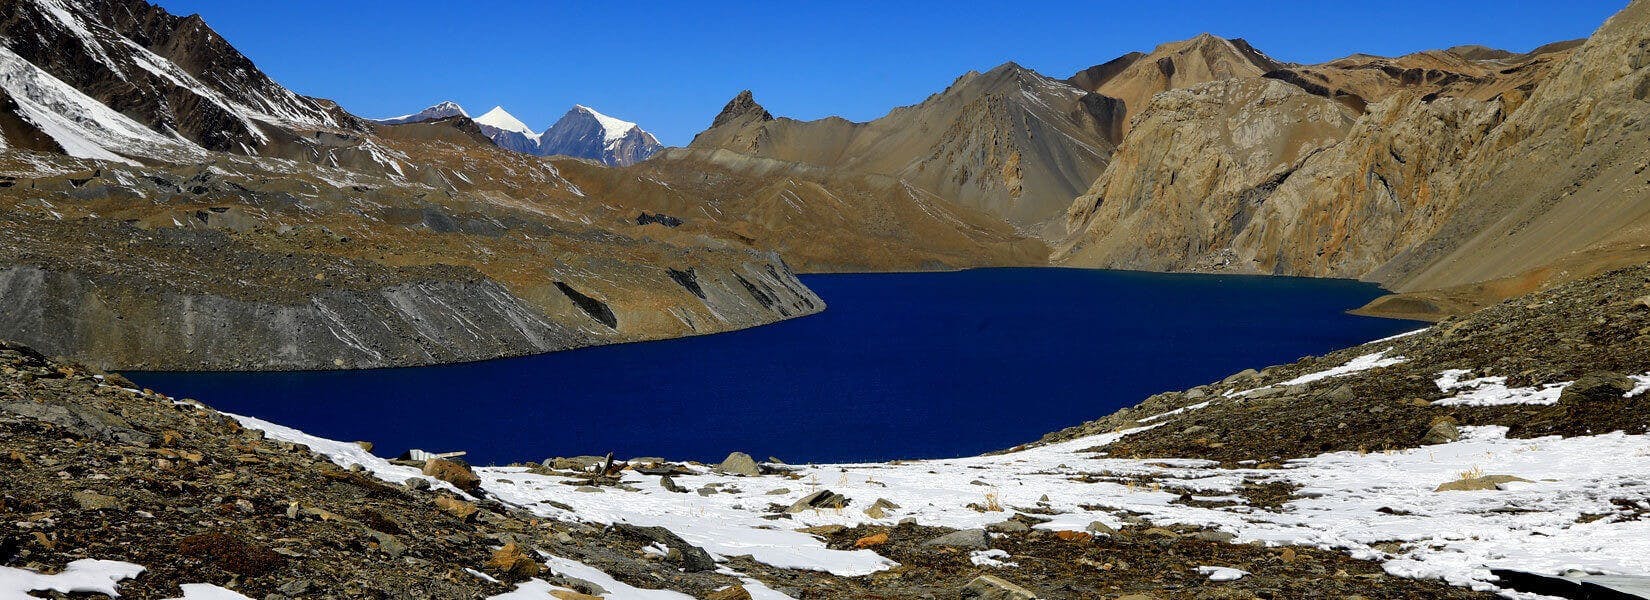 6 Best High Pass Trekking in Nepal